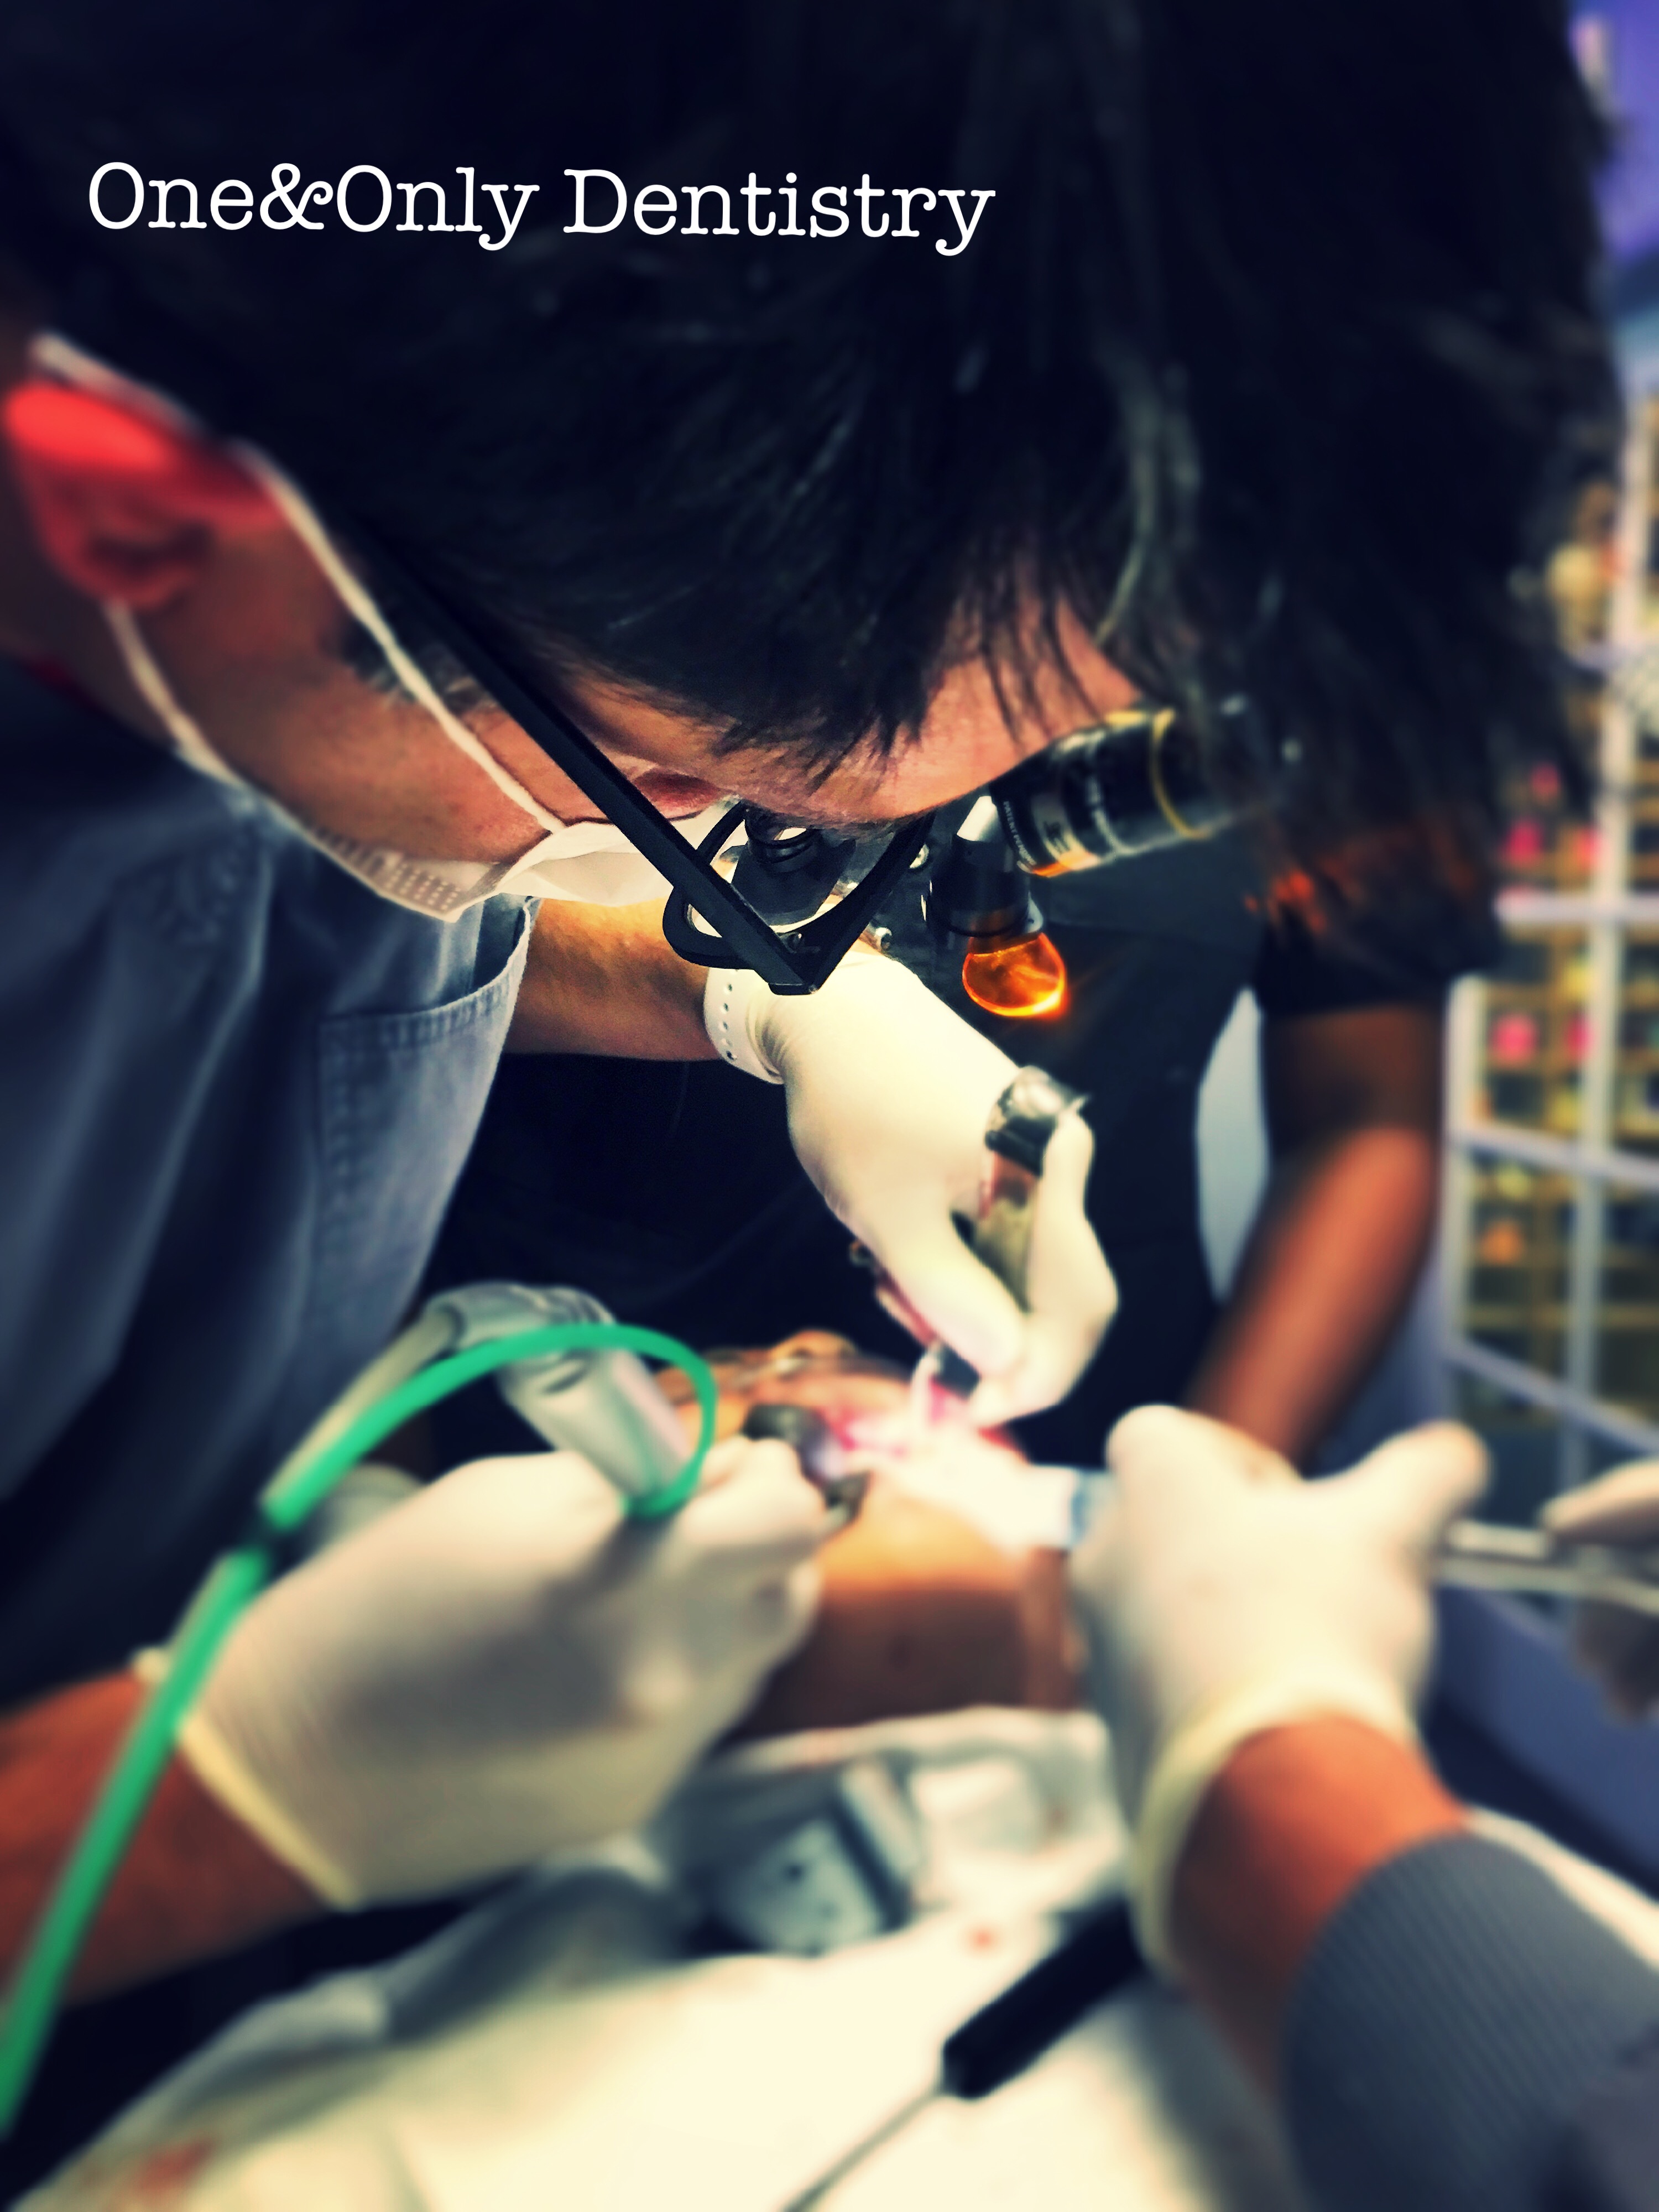 Dr. Benjamin placing a zygomatic dental implant